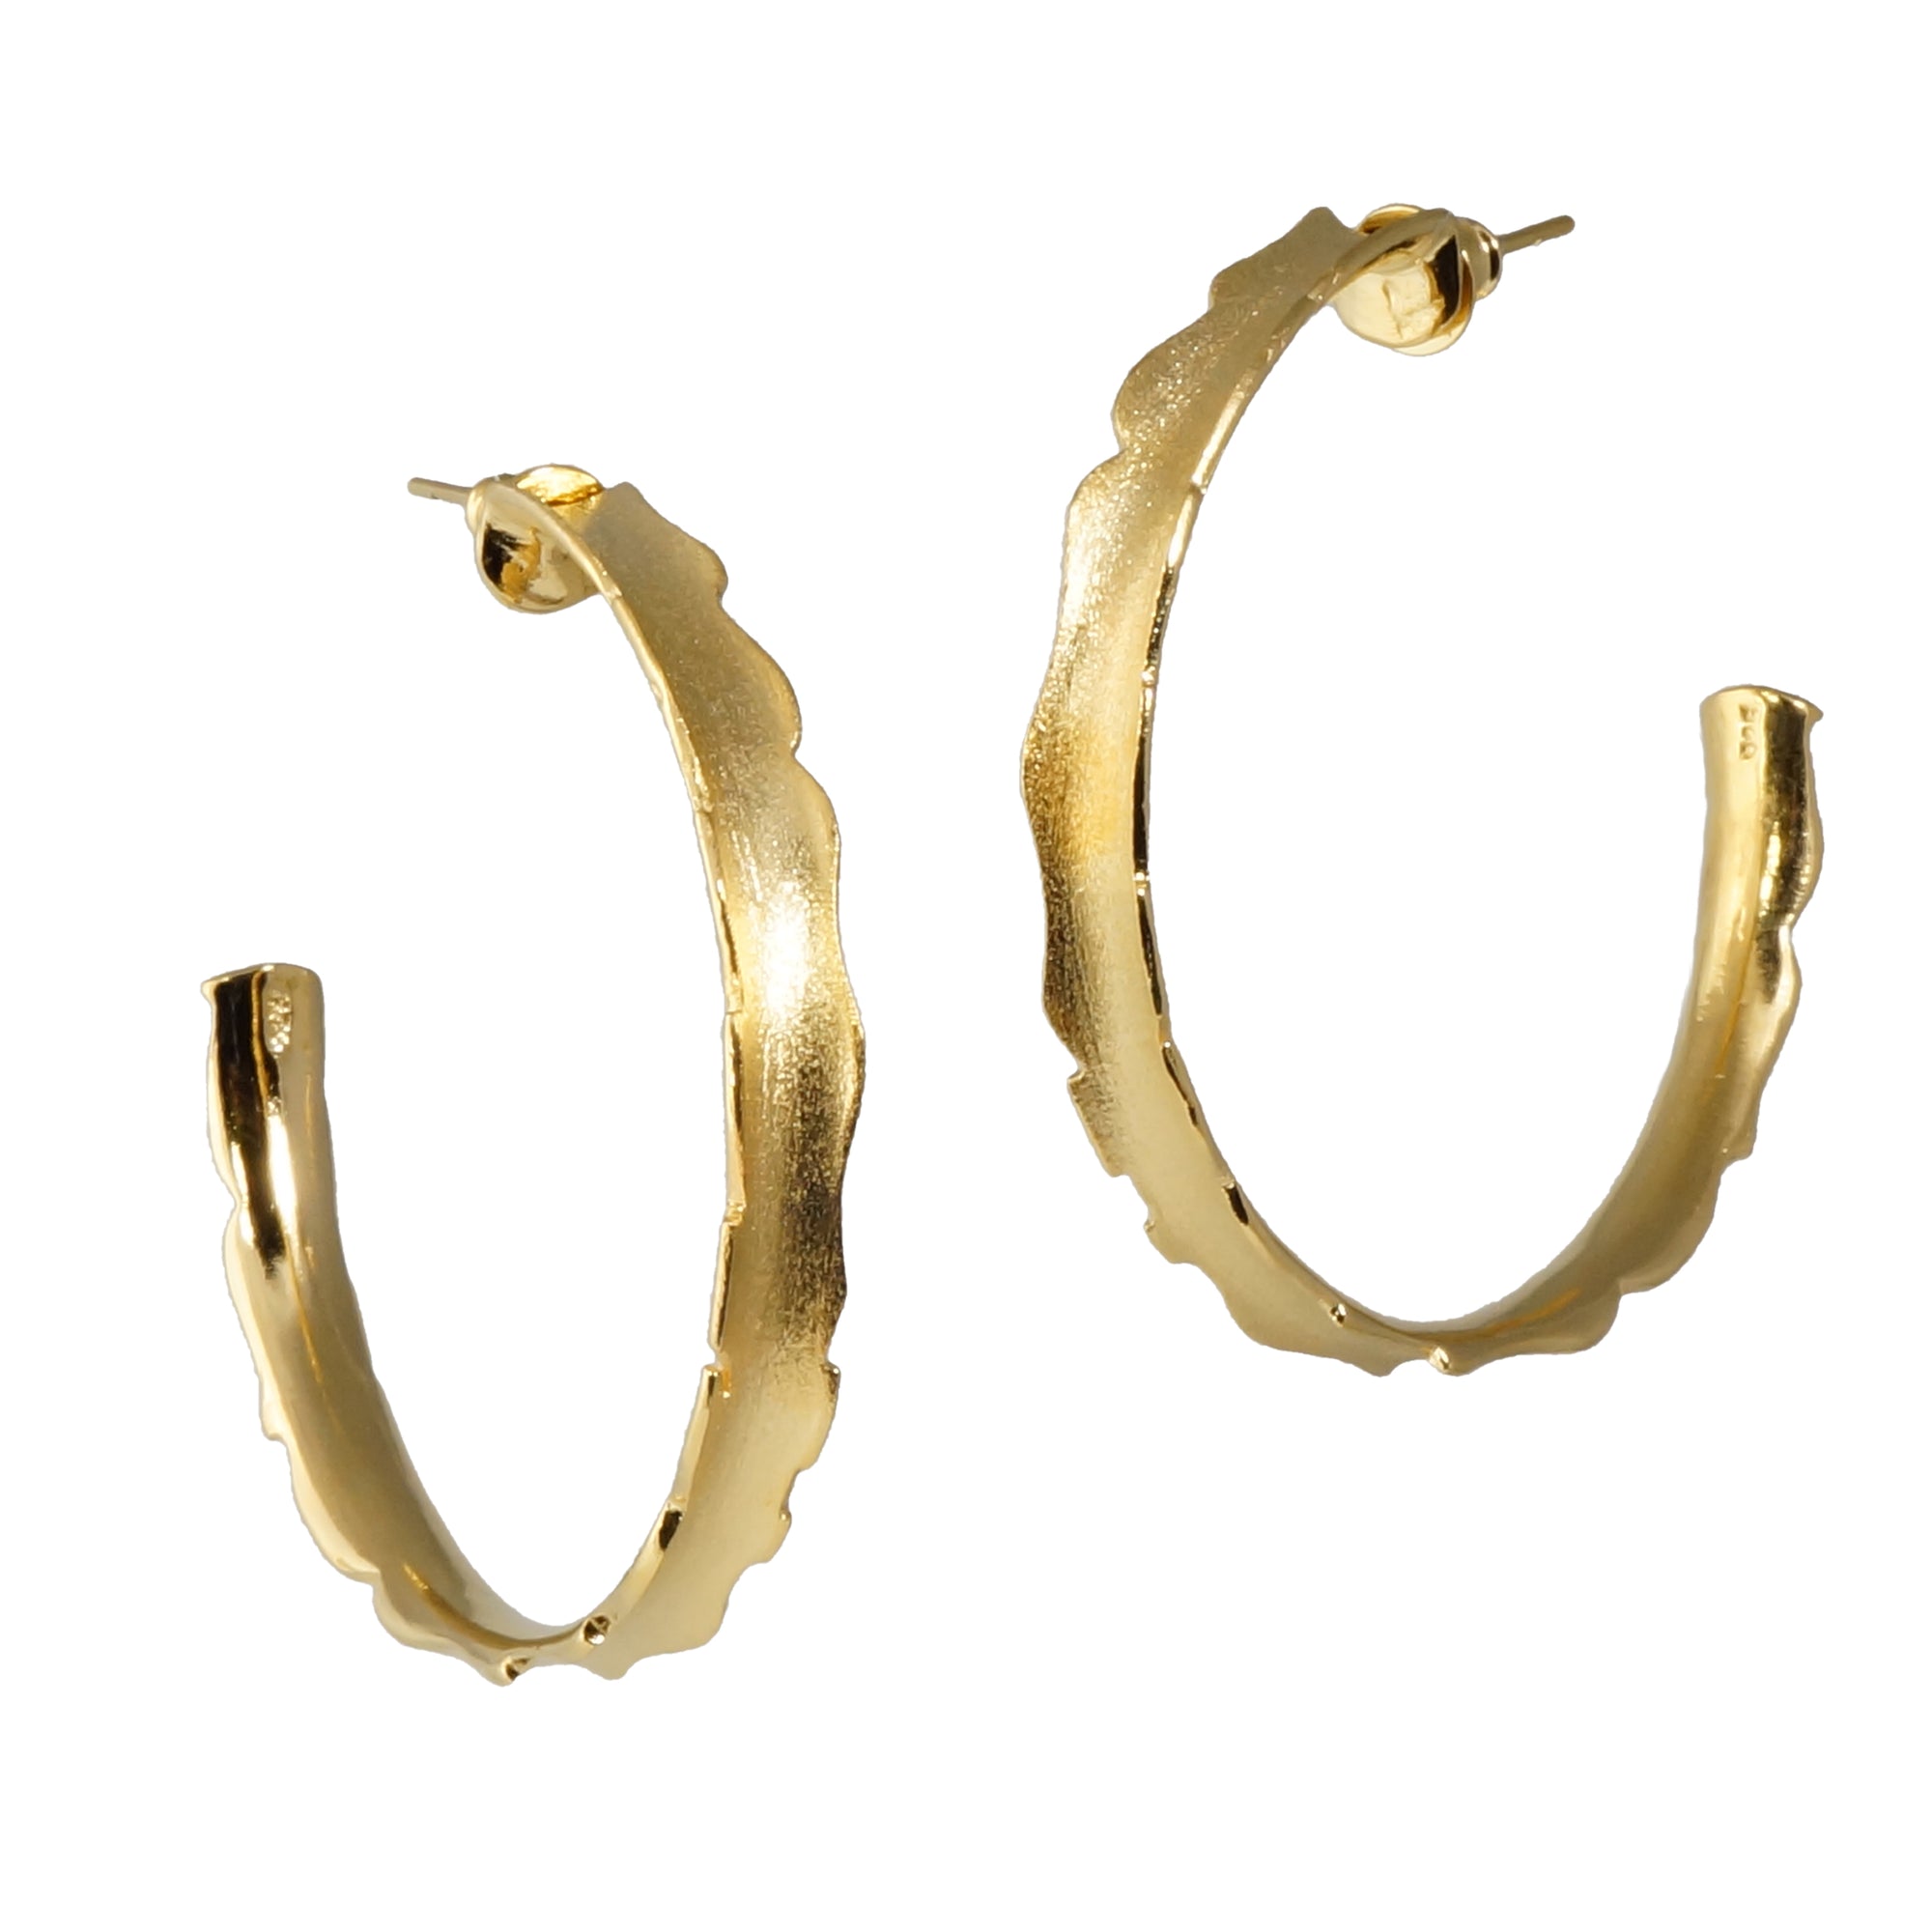 Unique Hoop Earrings, Gold - Multiple Sizes